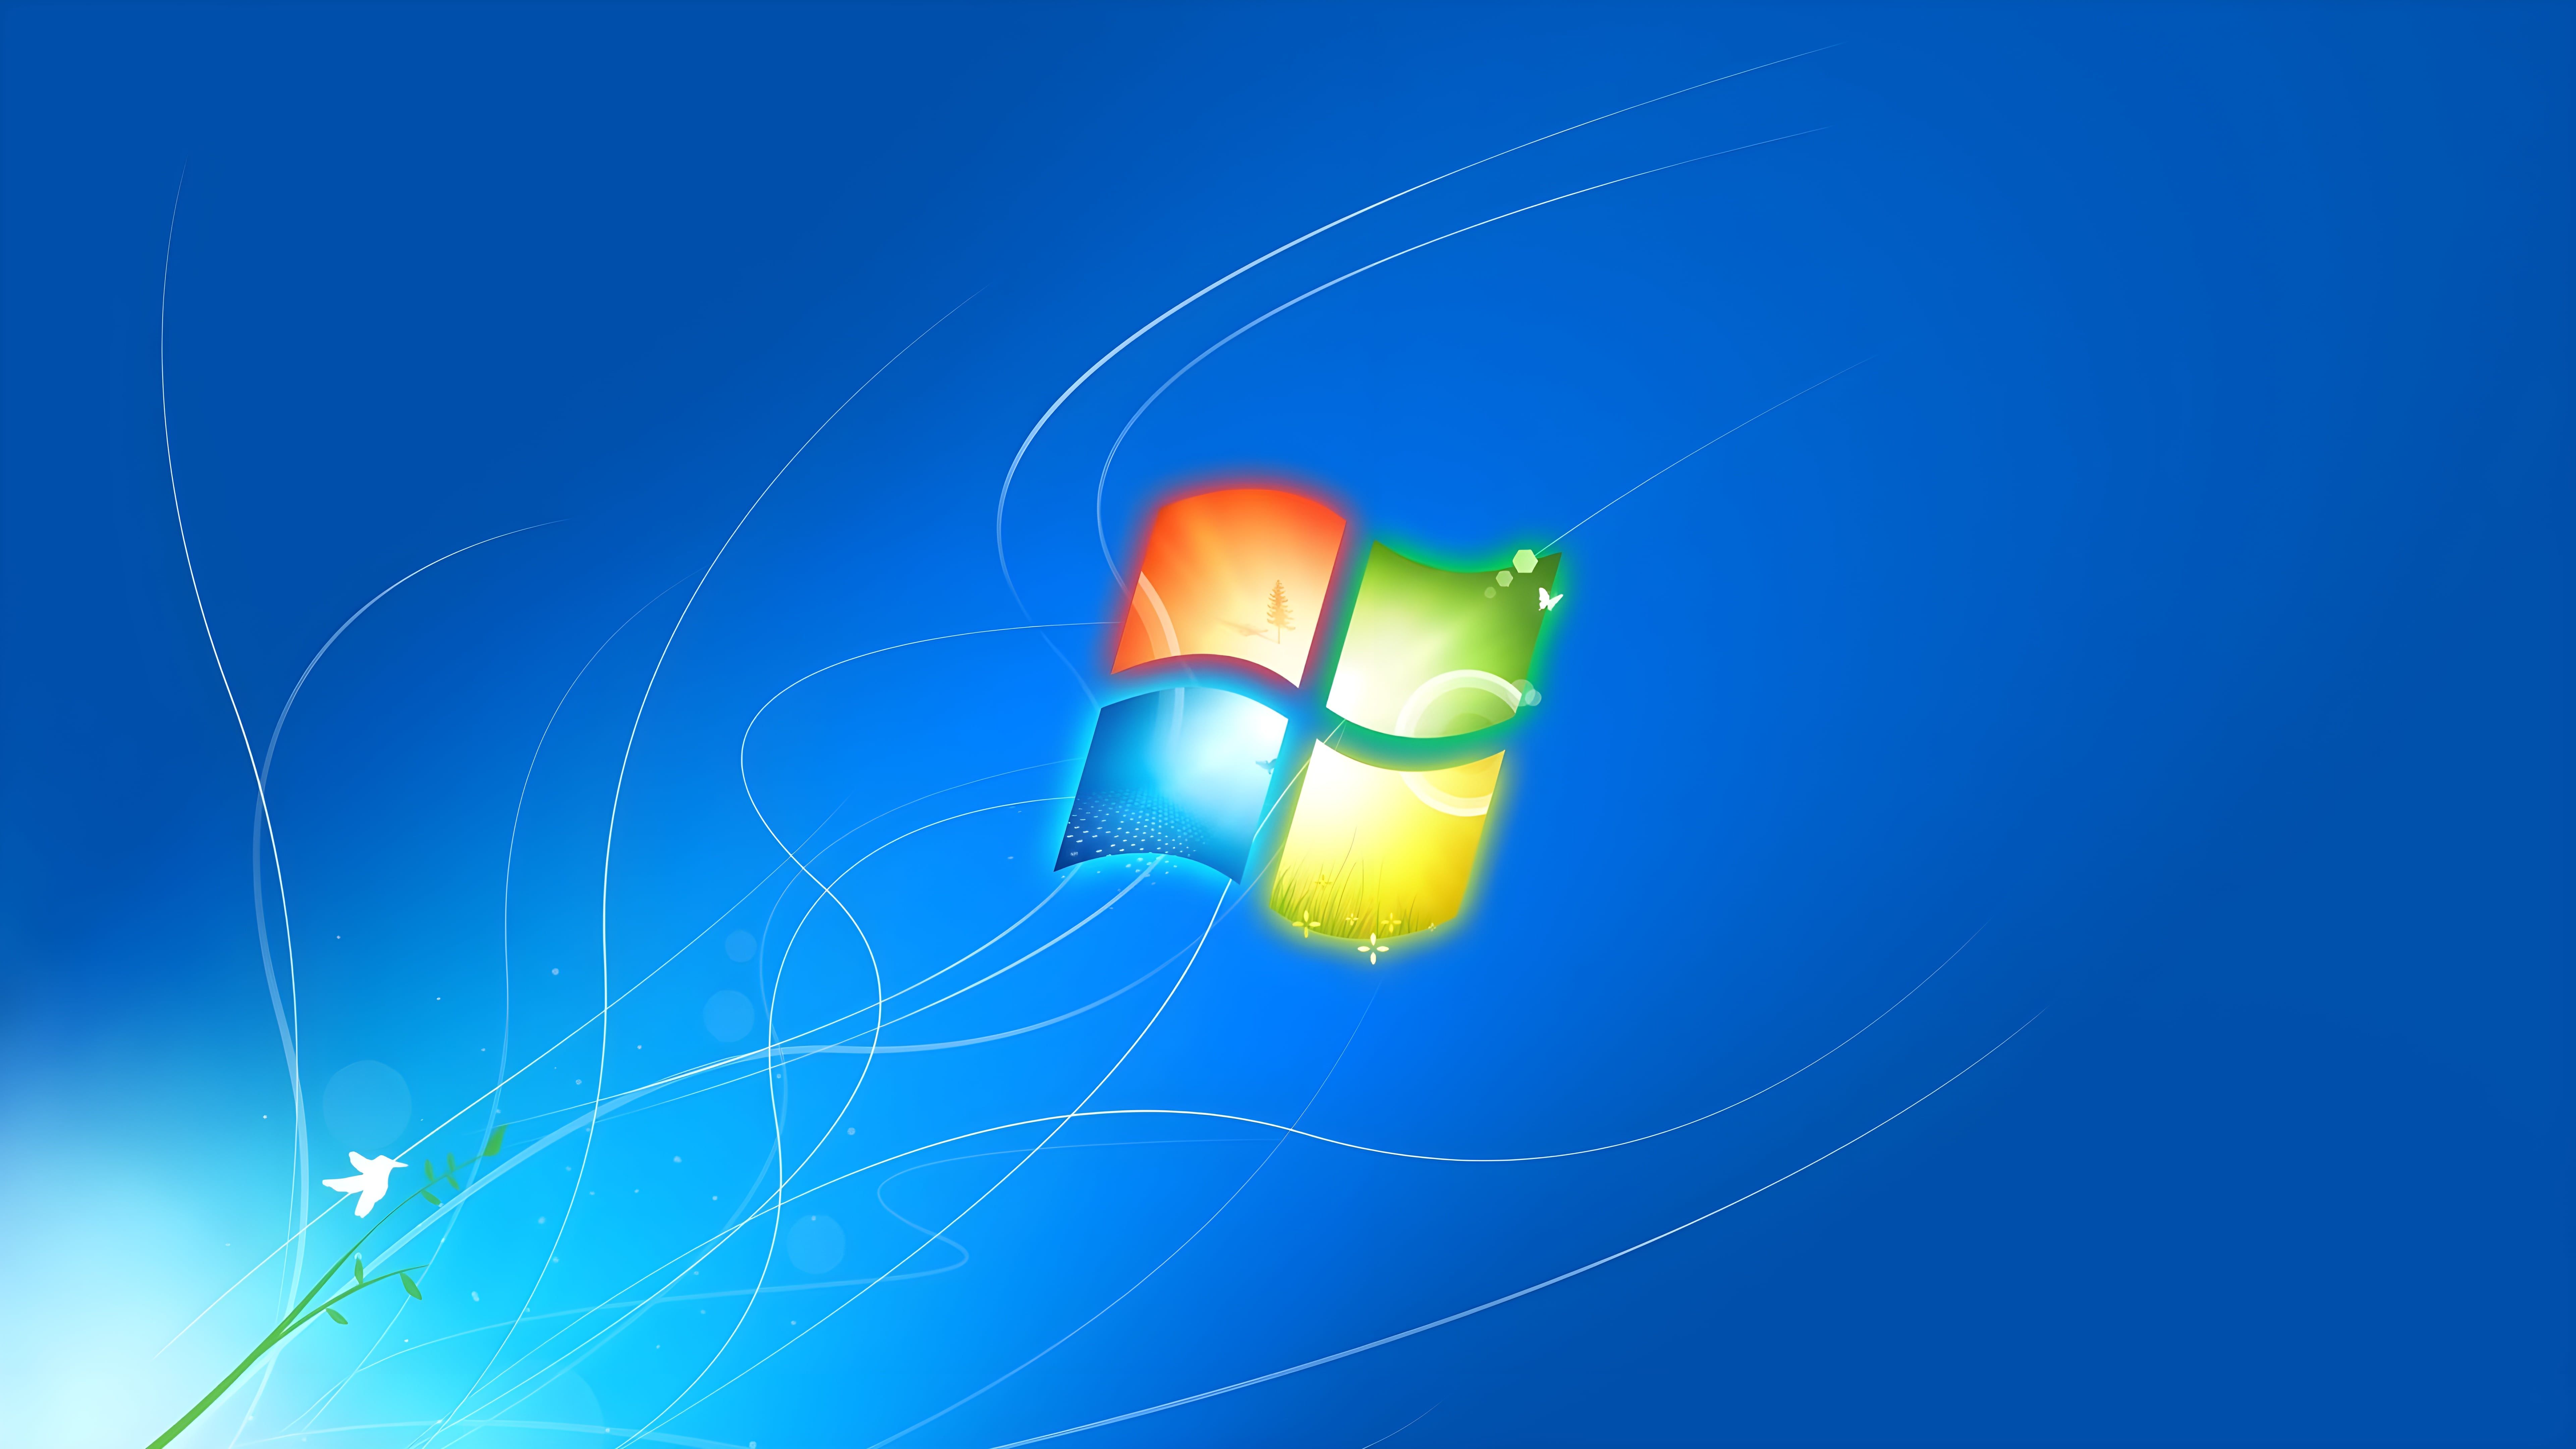  Windows 7 Hintergrundbild 7680x4320. Windows 7 Default Wallpaper Upscaled to 8k (7680x4320)